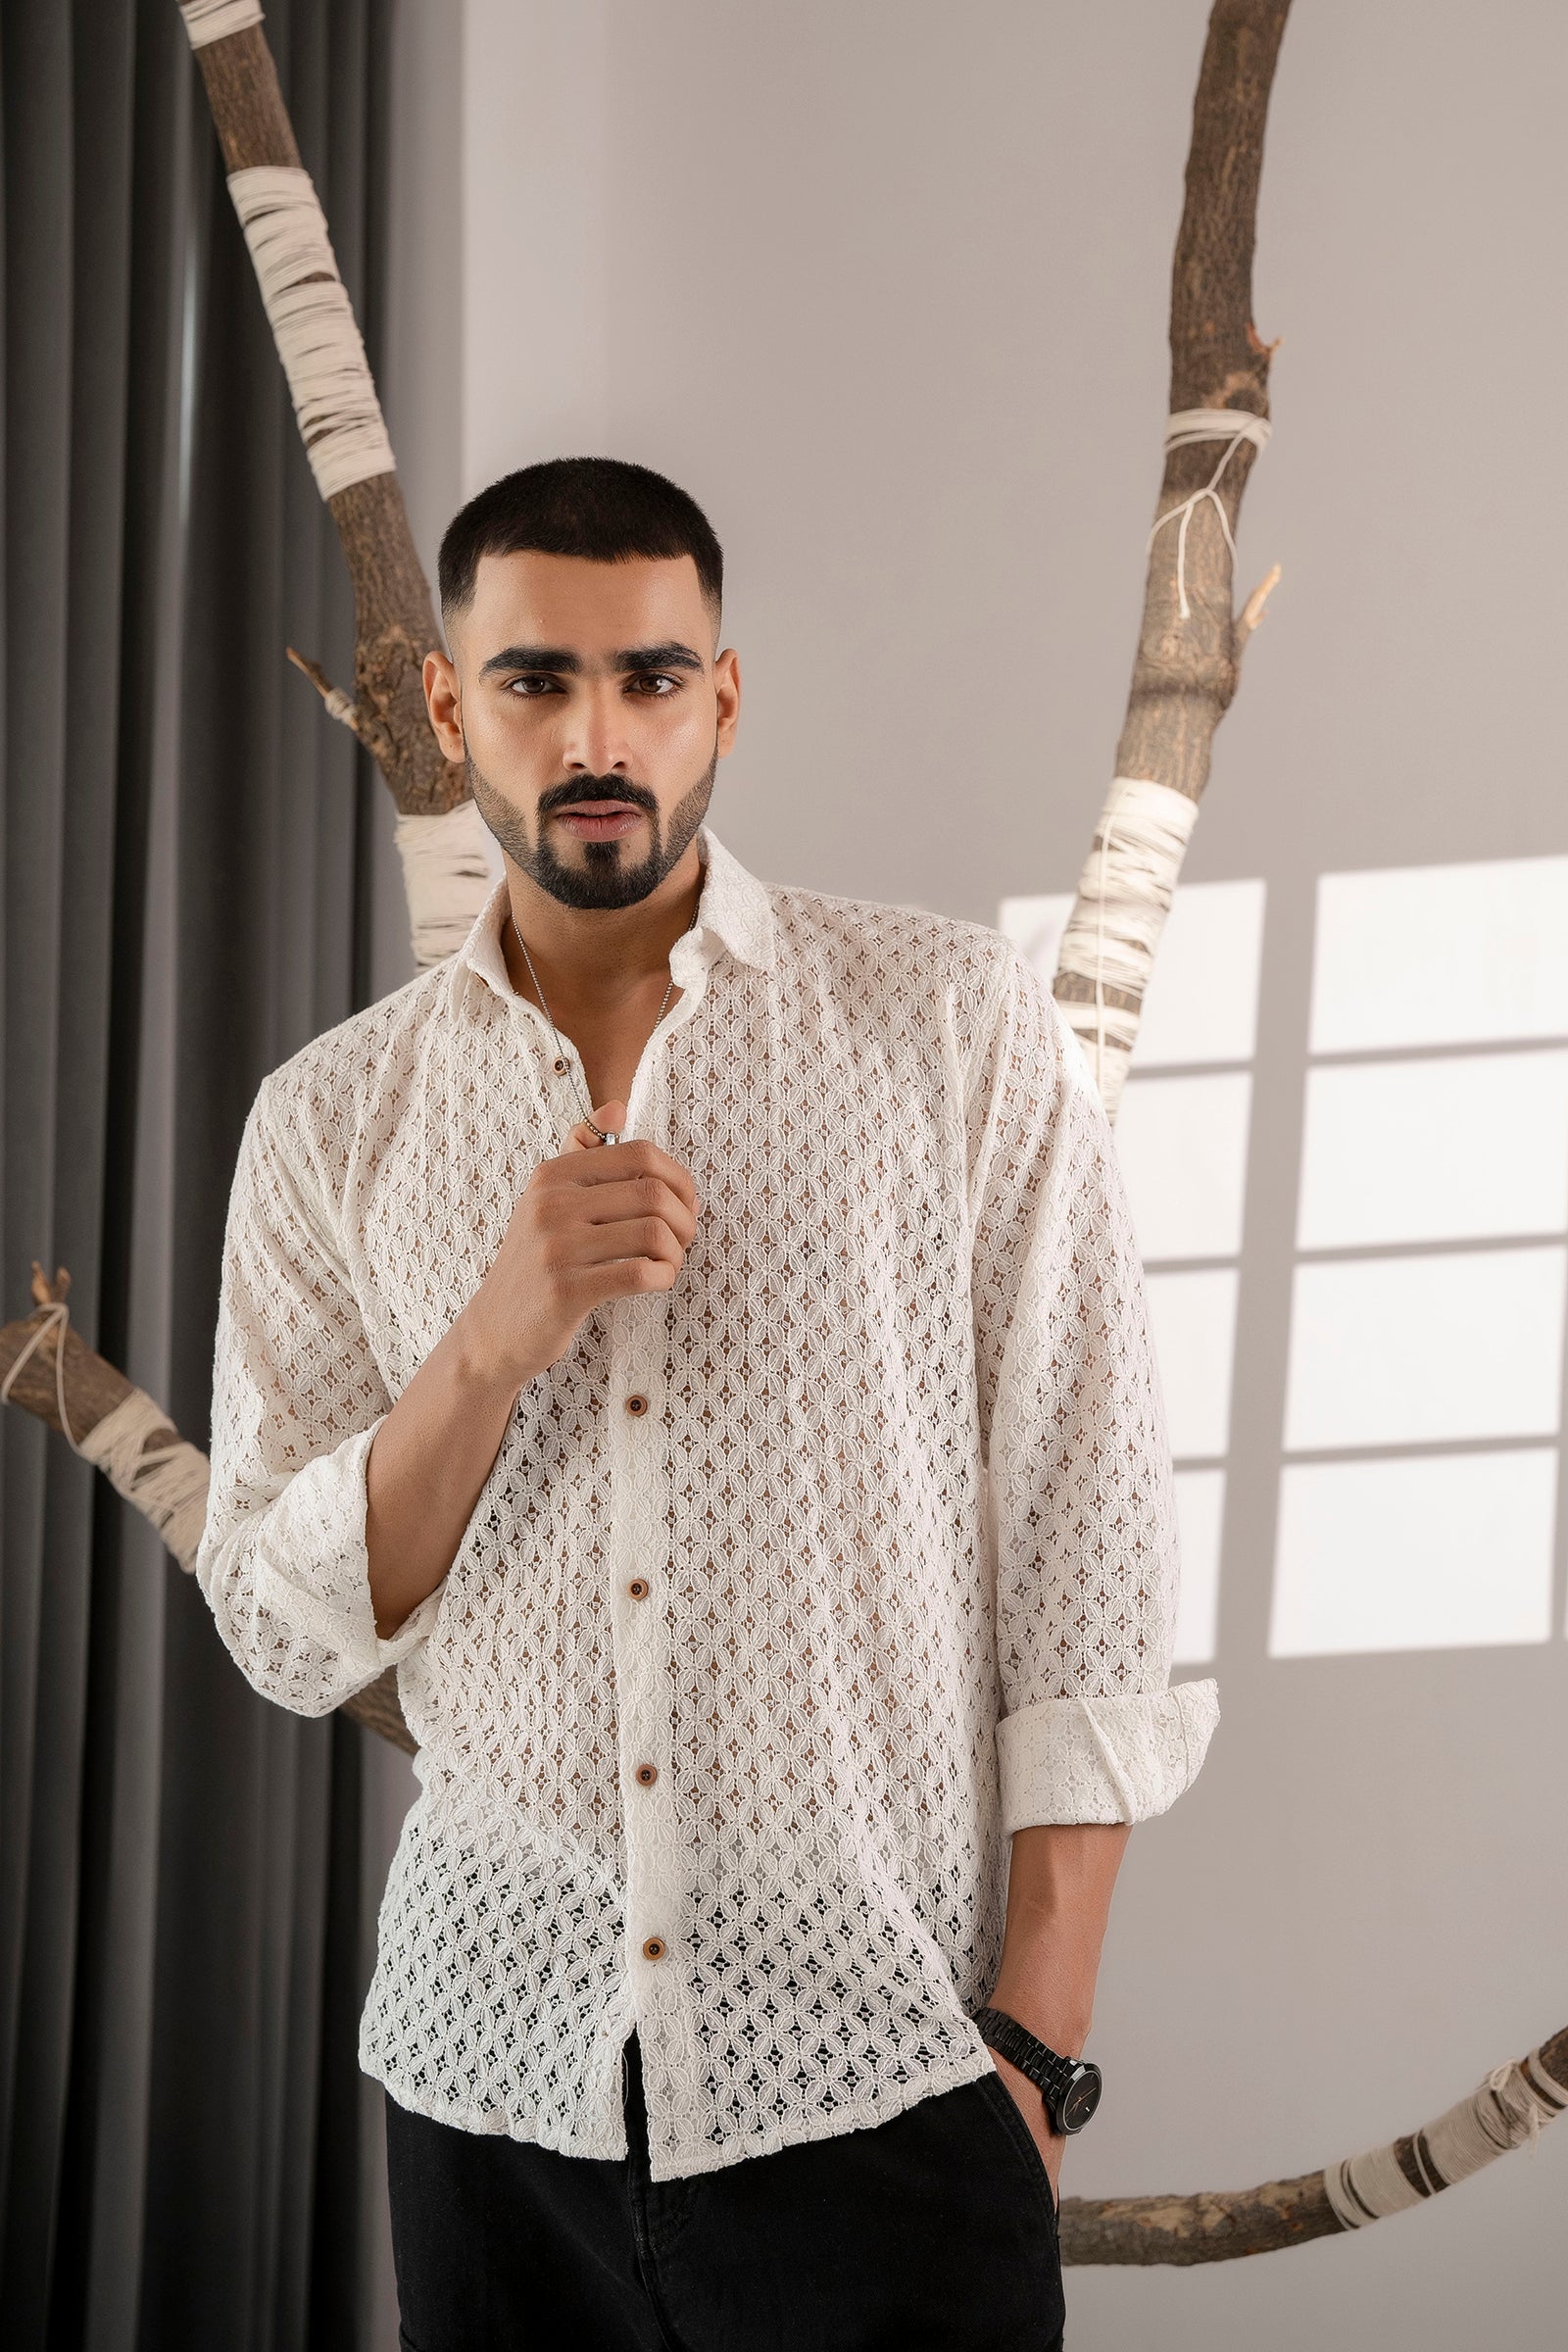 Firangi Yarn Crochet Cotton White Lace Shirt For Men - Full Sleeves